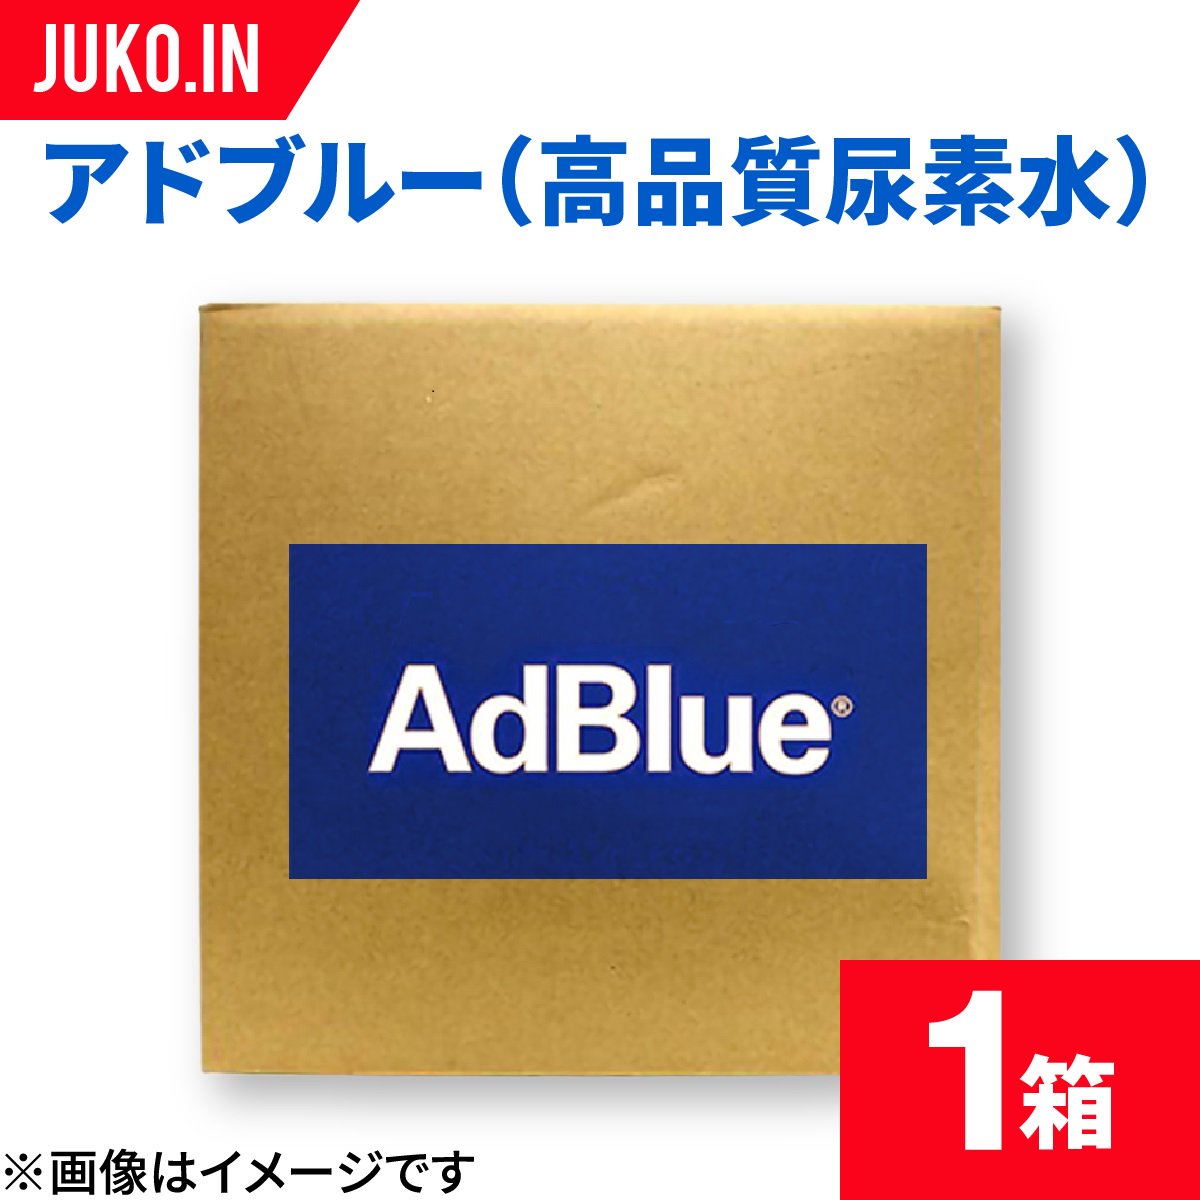 AdBlue|アドブルー|20L 1箱|高品位尿素水|バッグインボックス|ブルーベーシック|ISO22241-1|VDAライセンス取得品